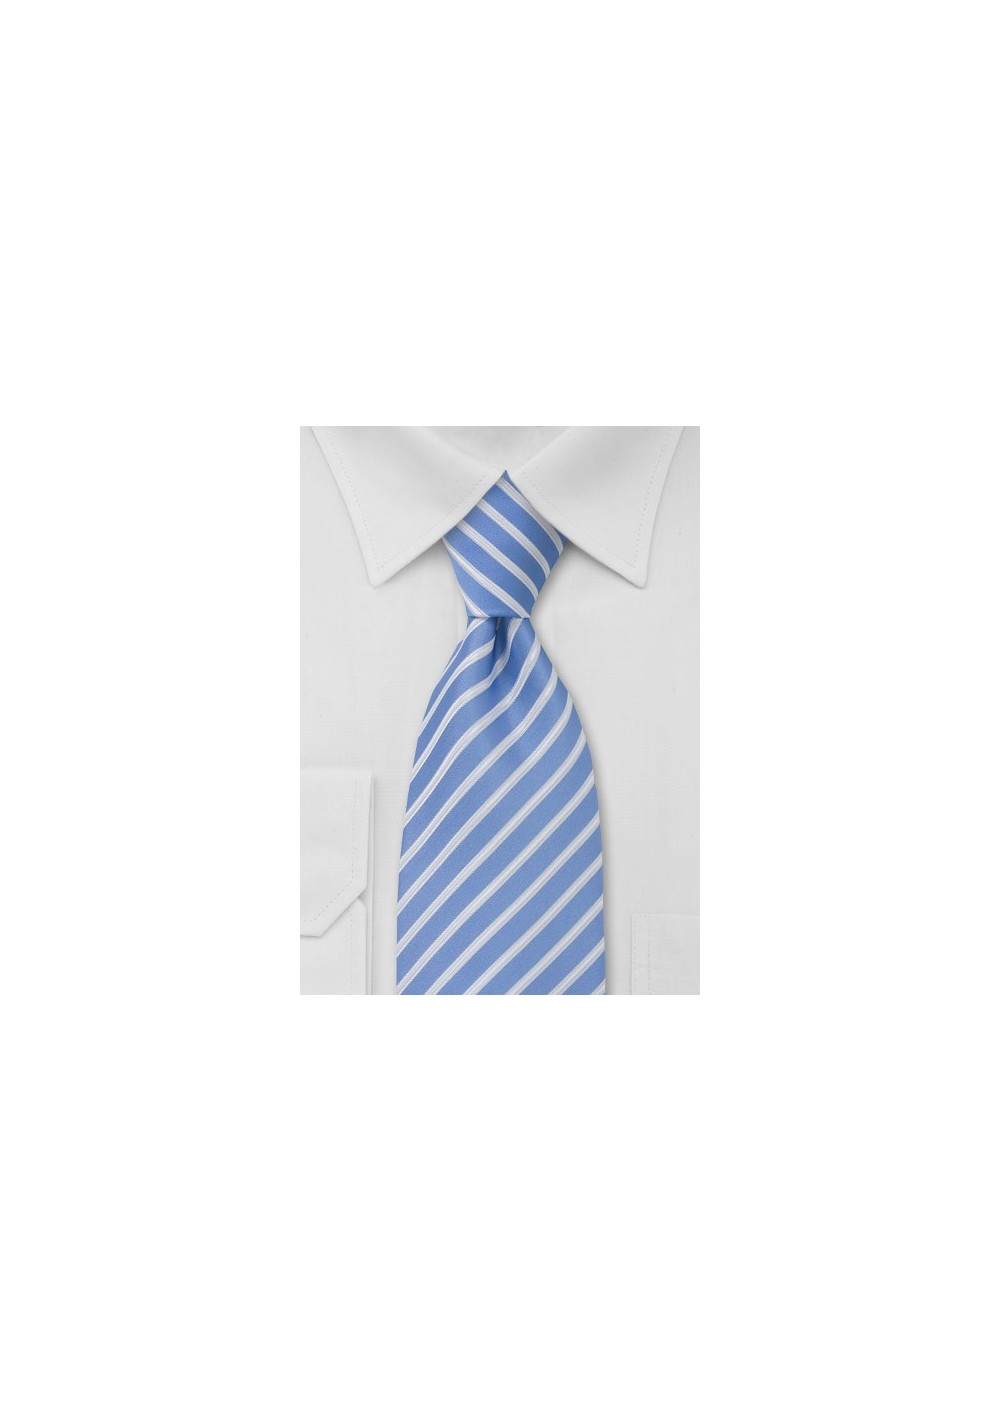 Striped Tie in Light Blue, White